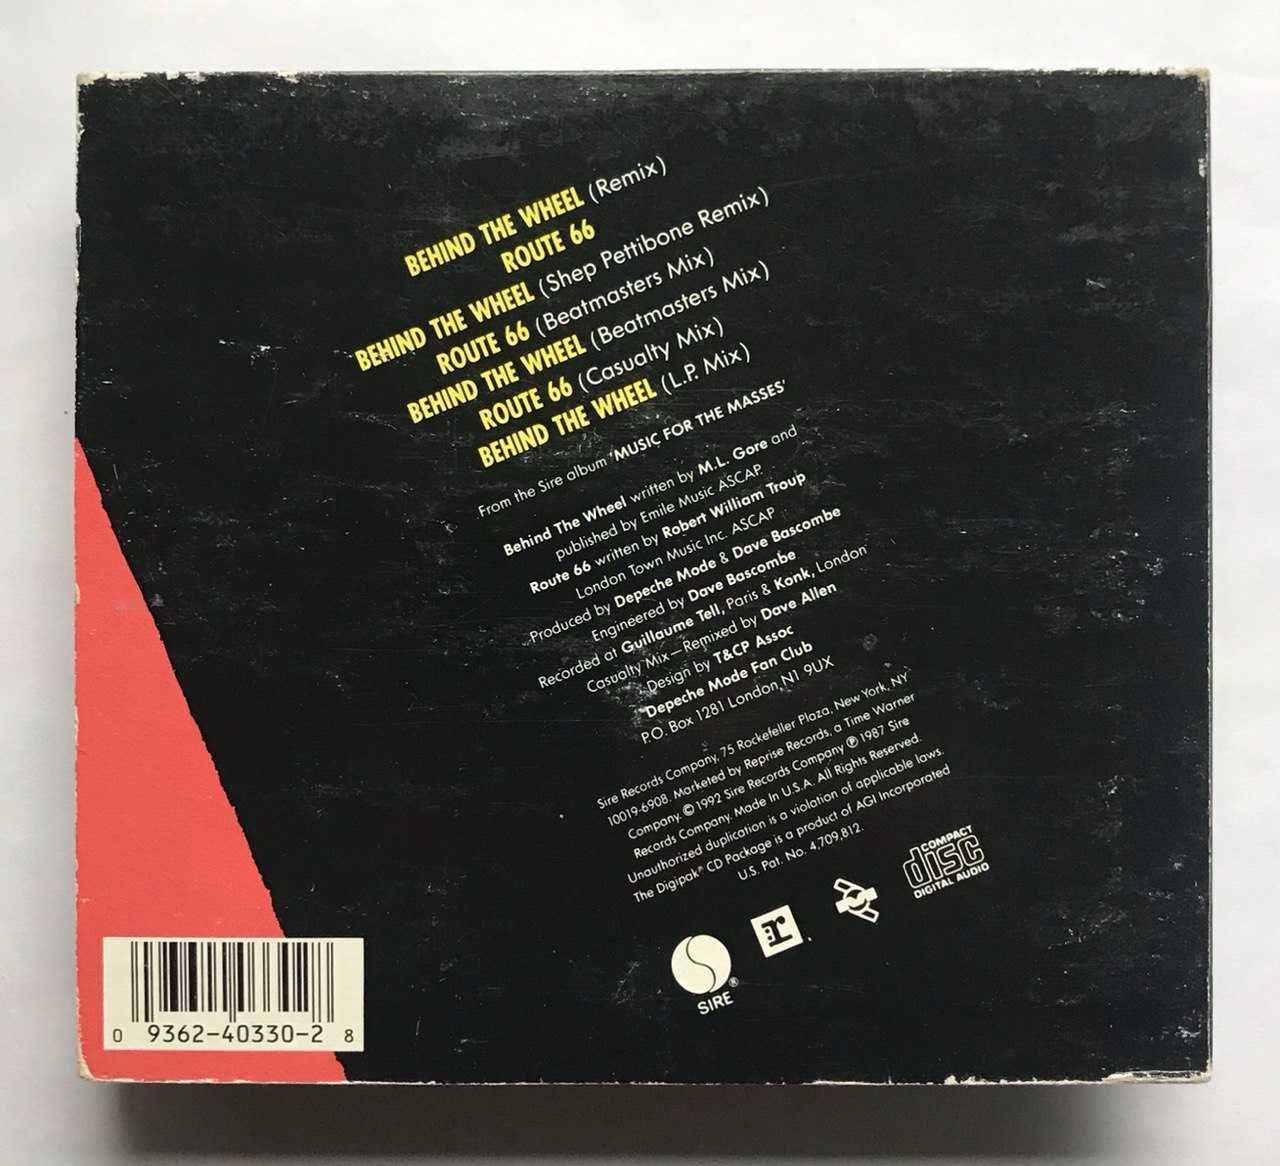 Depeche Mode – Behind The Wheel (1992, U.S.A.)